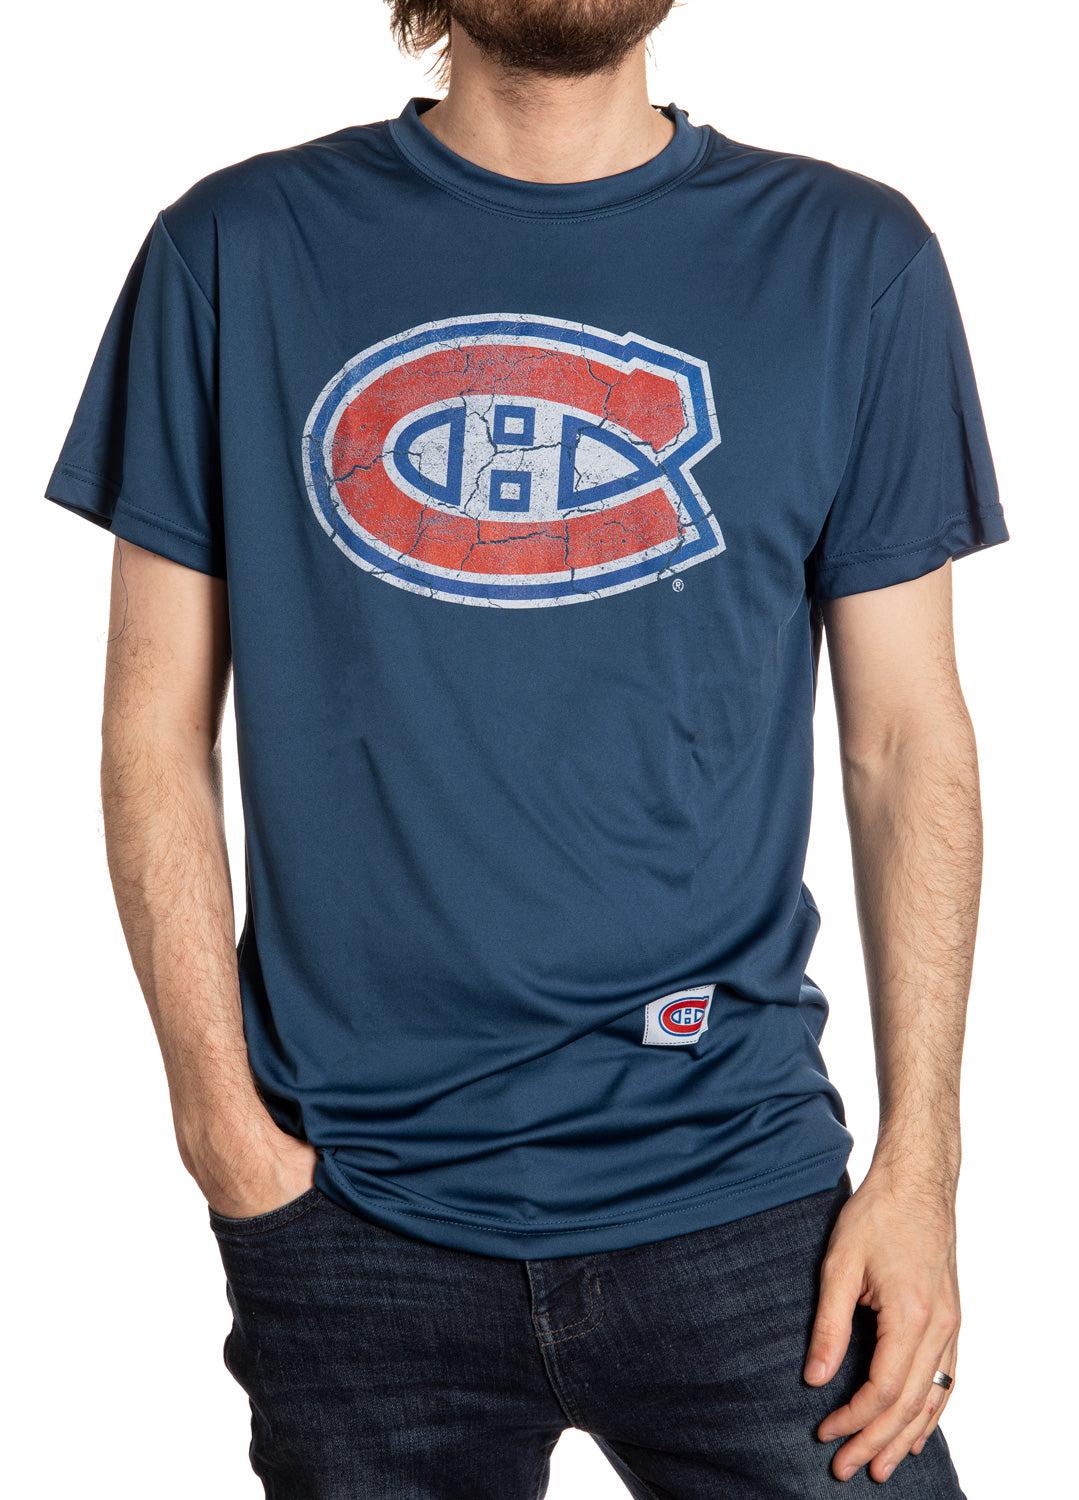 Official NHL Montreal Canadiens Boxer Briefs 2pk – Calhoun Store